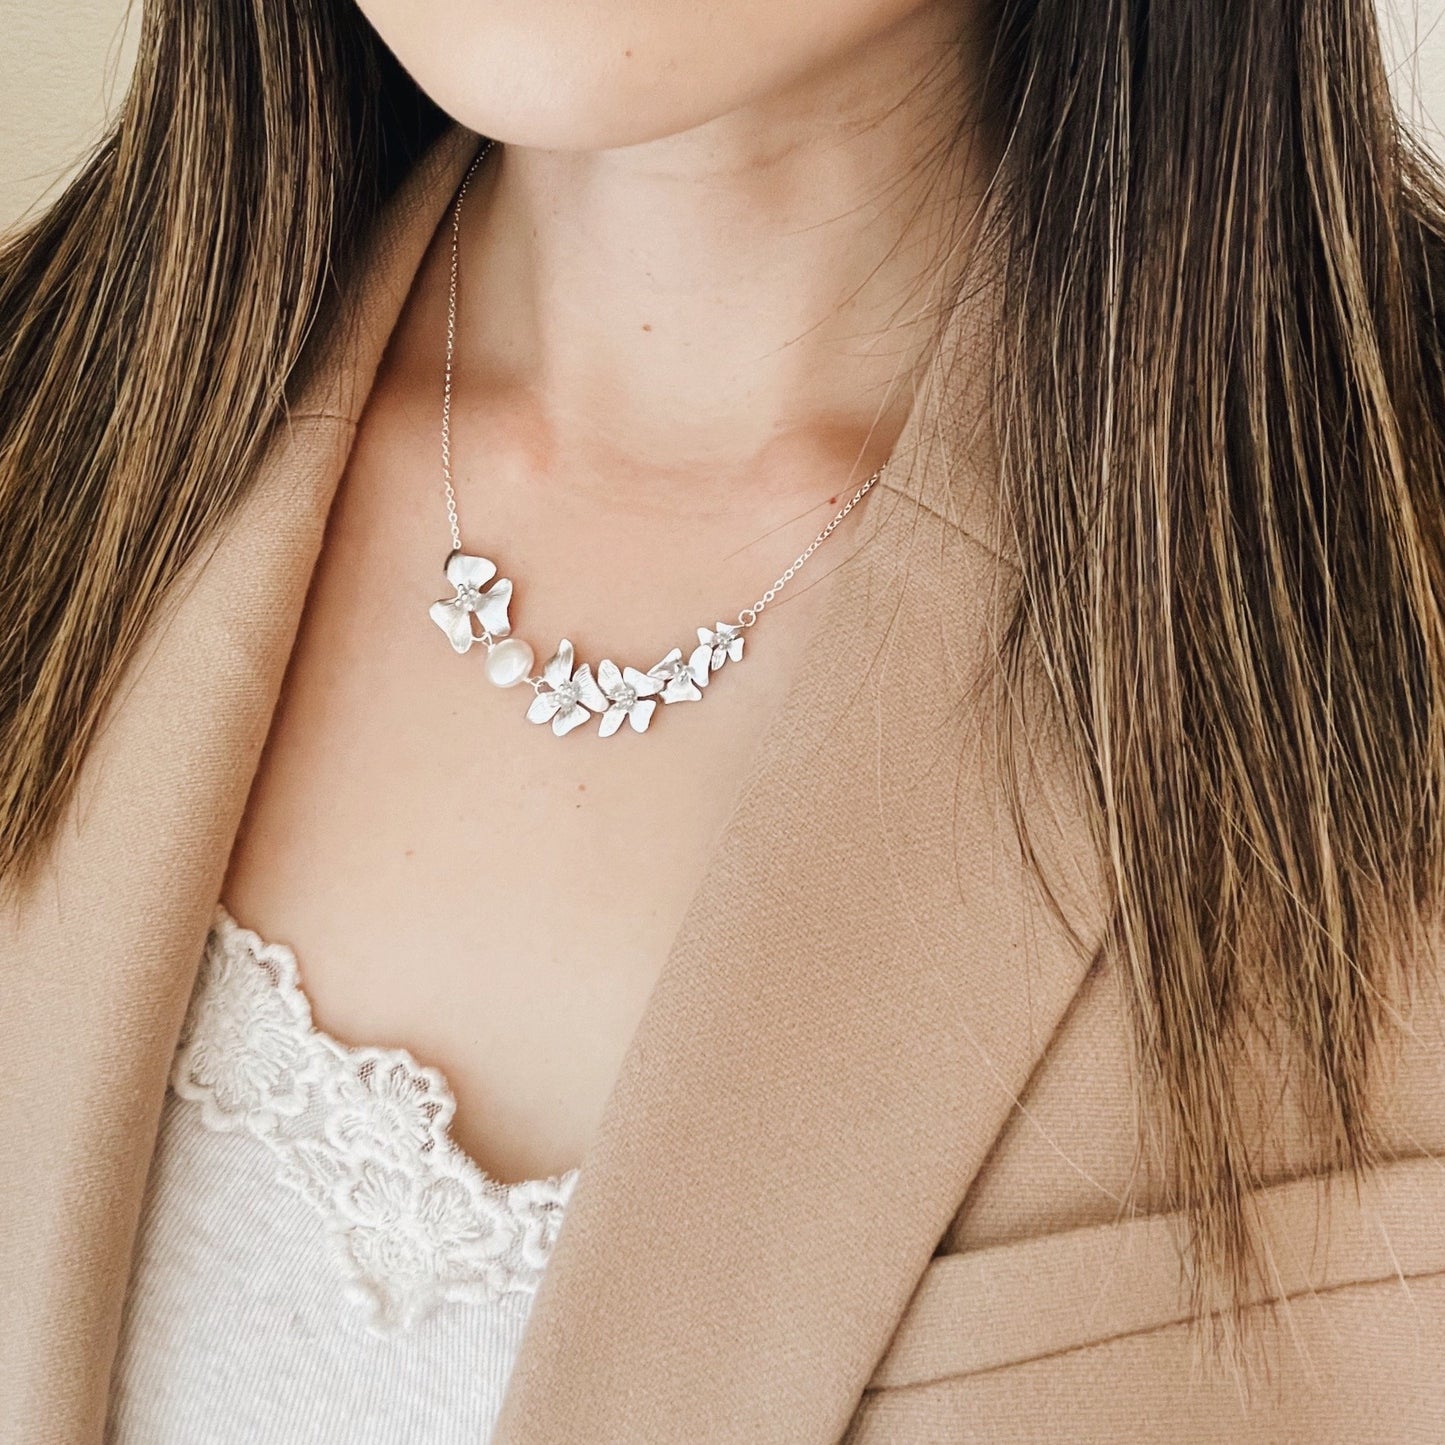 Woman wearing silver dogwood flower necklace